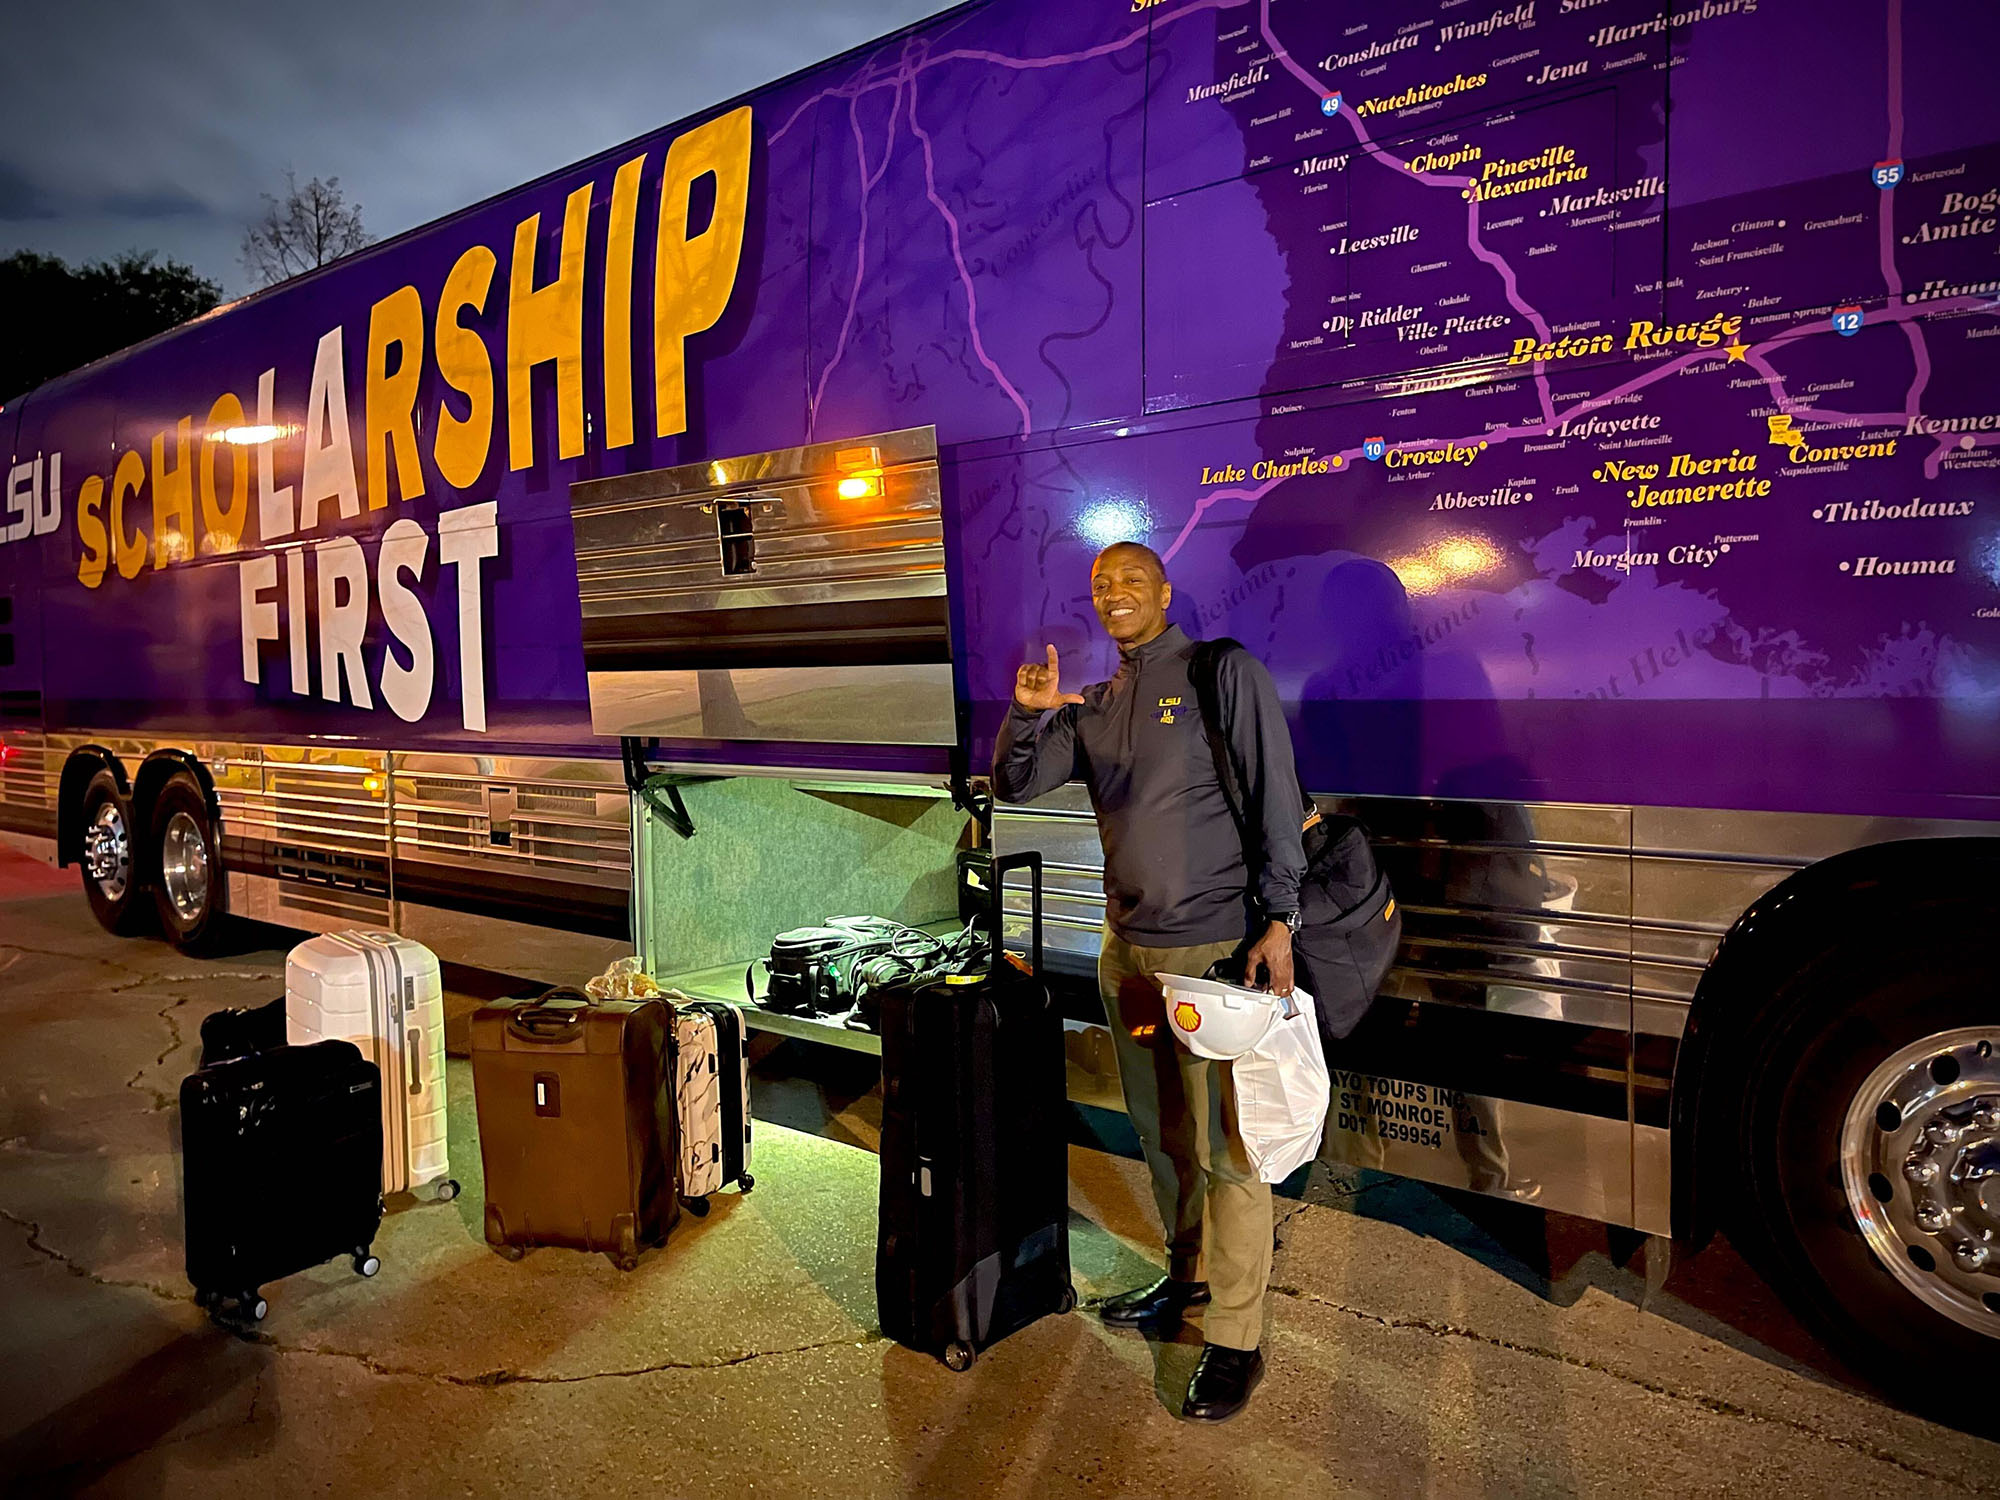 President Tate loads luggage onto the tour bus